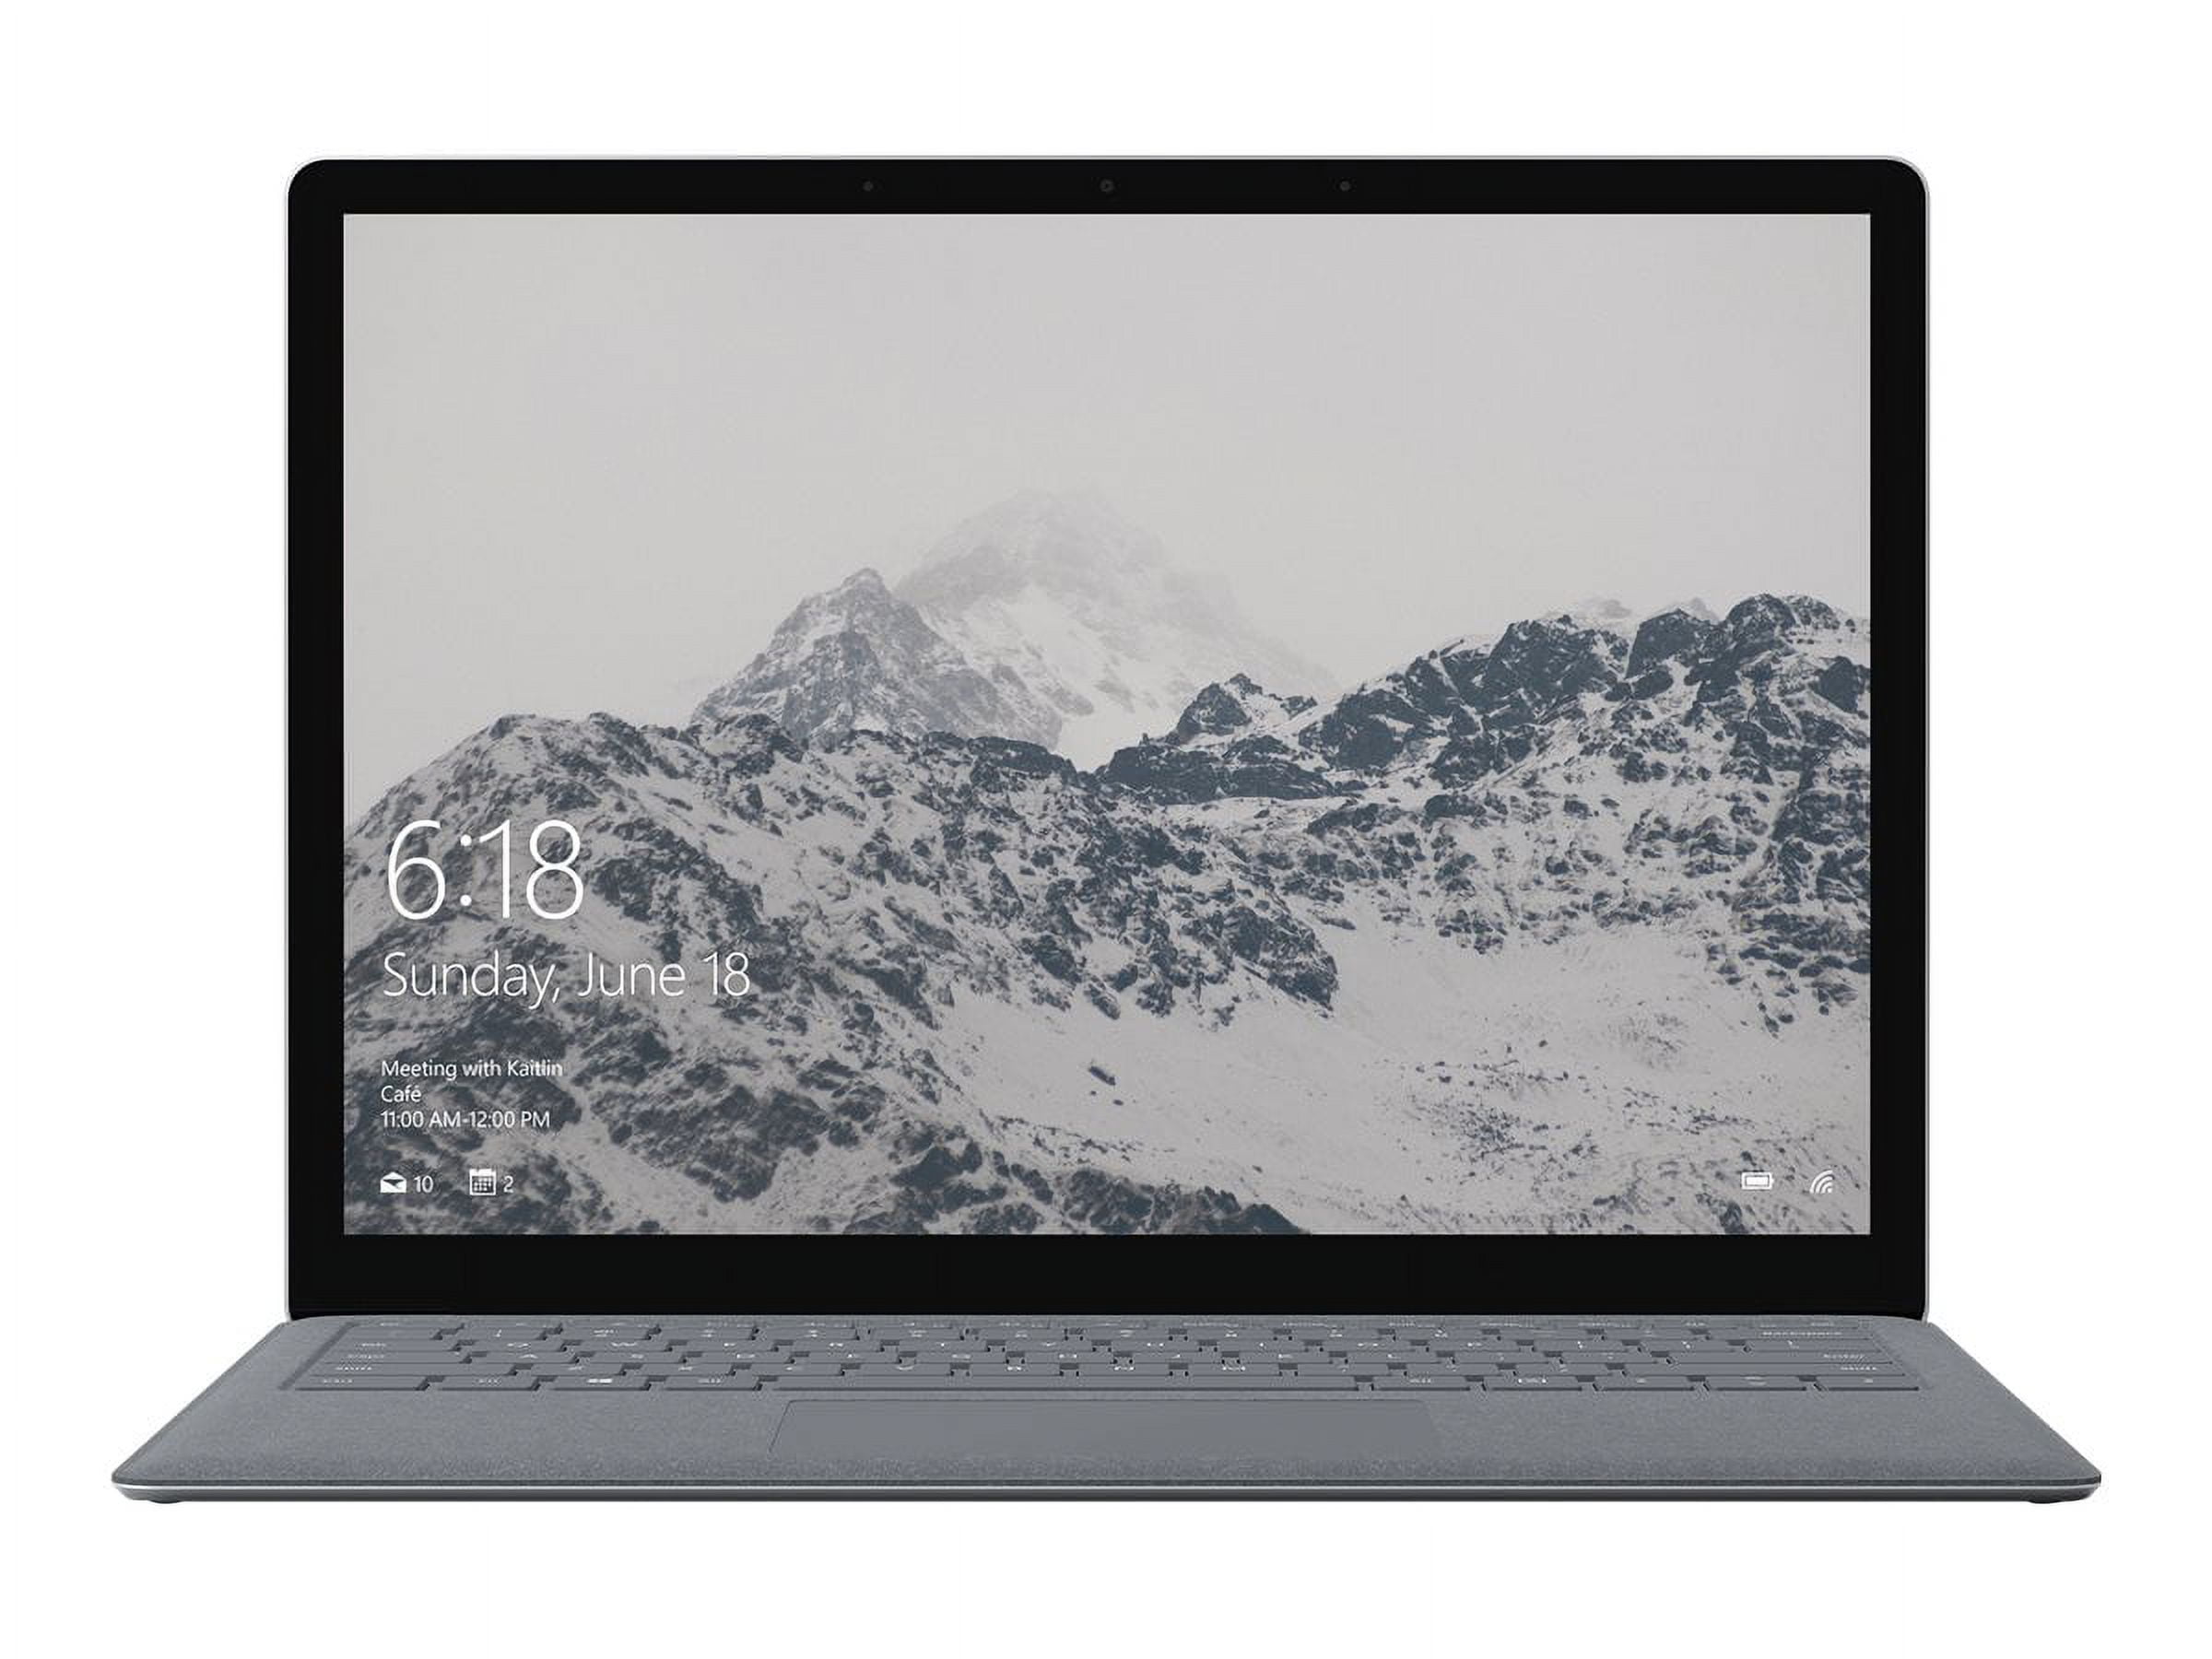 Microsoft Surface 13.5 Laptop DAL-00001 Intel Core i7 7th Gen 7660U (2.50  GHz) 16 GB Memory 512 GB SSD Intel Iris Plus Graphics 640 Touchscreen  Windows 10 S - Platinum 